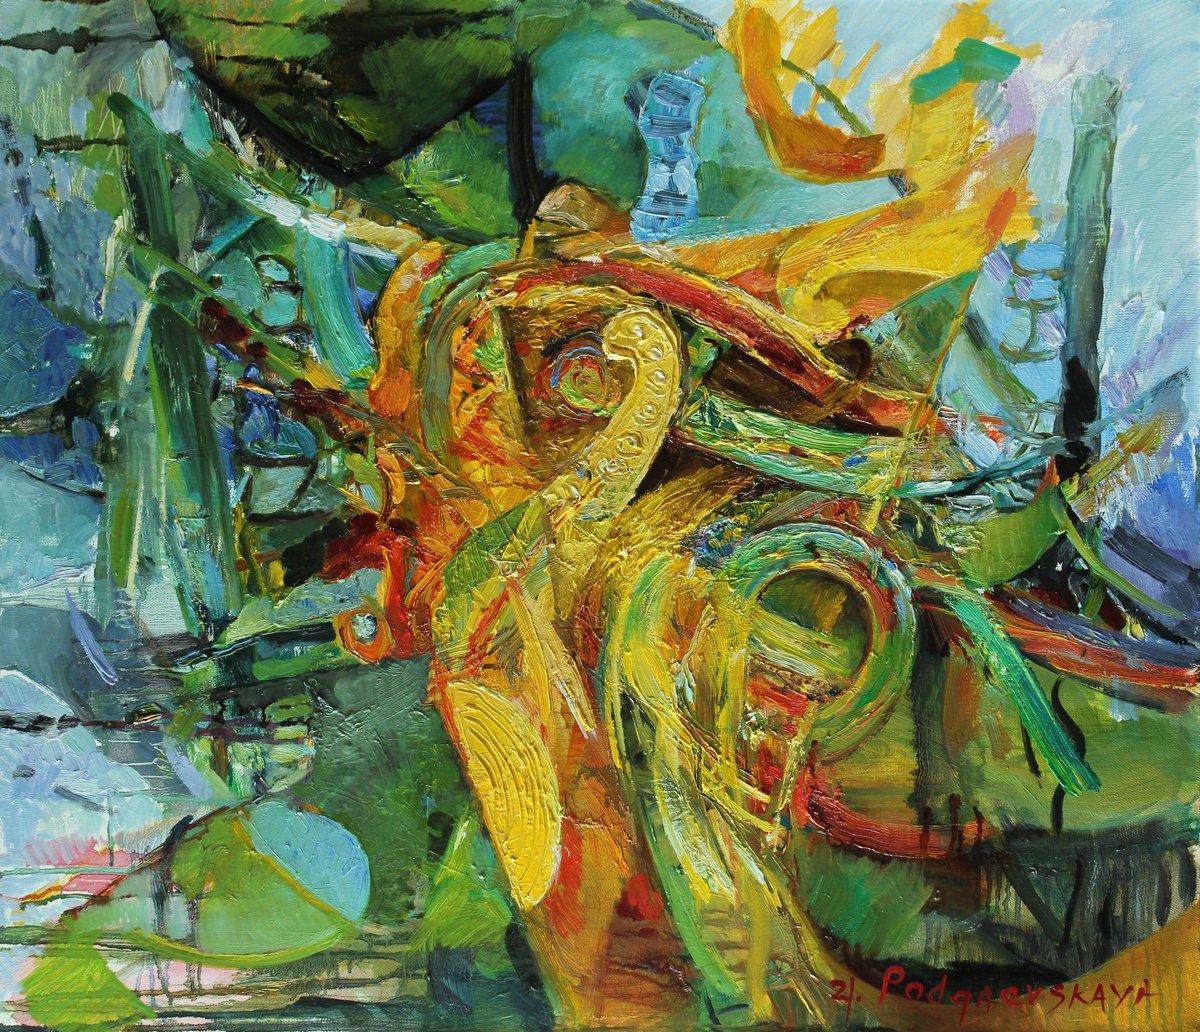 Composition № 38 by Marina Podgaevskaya